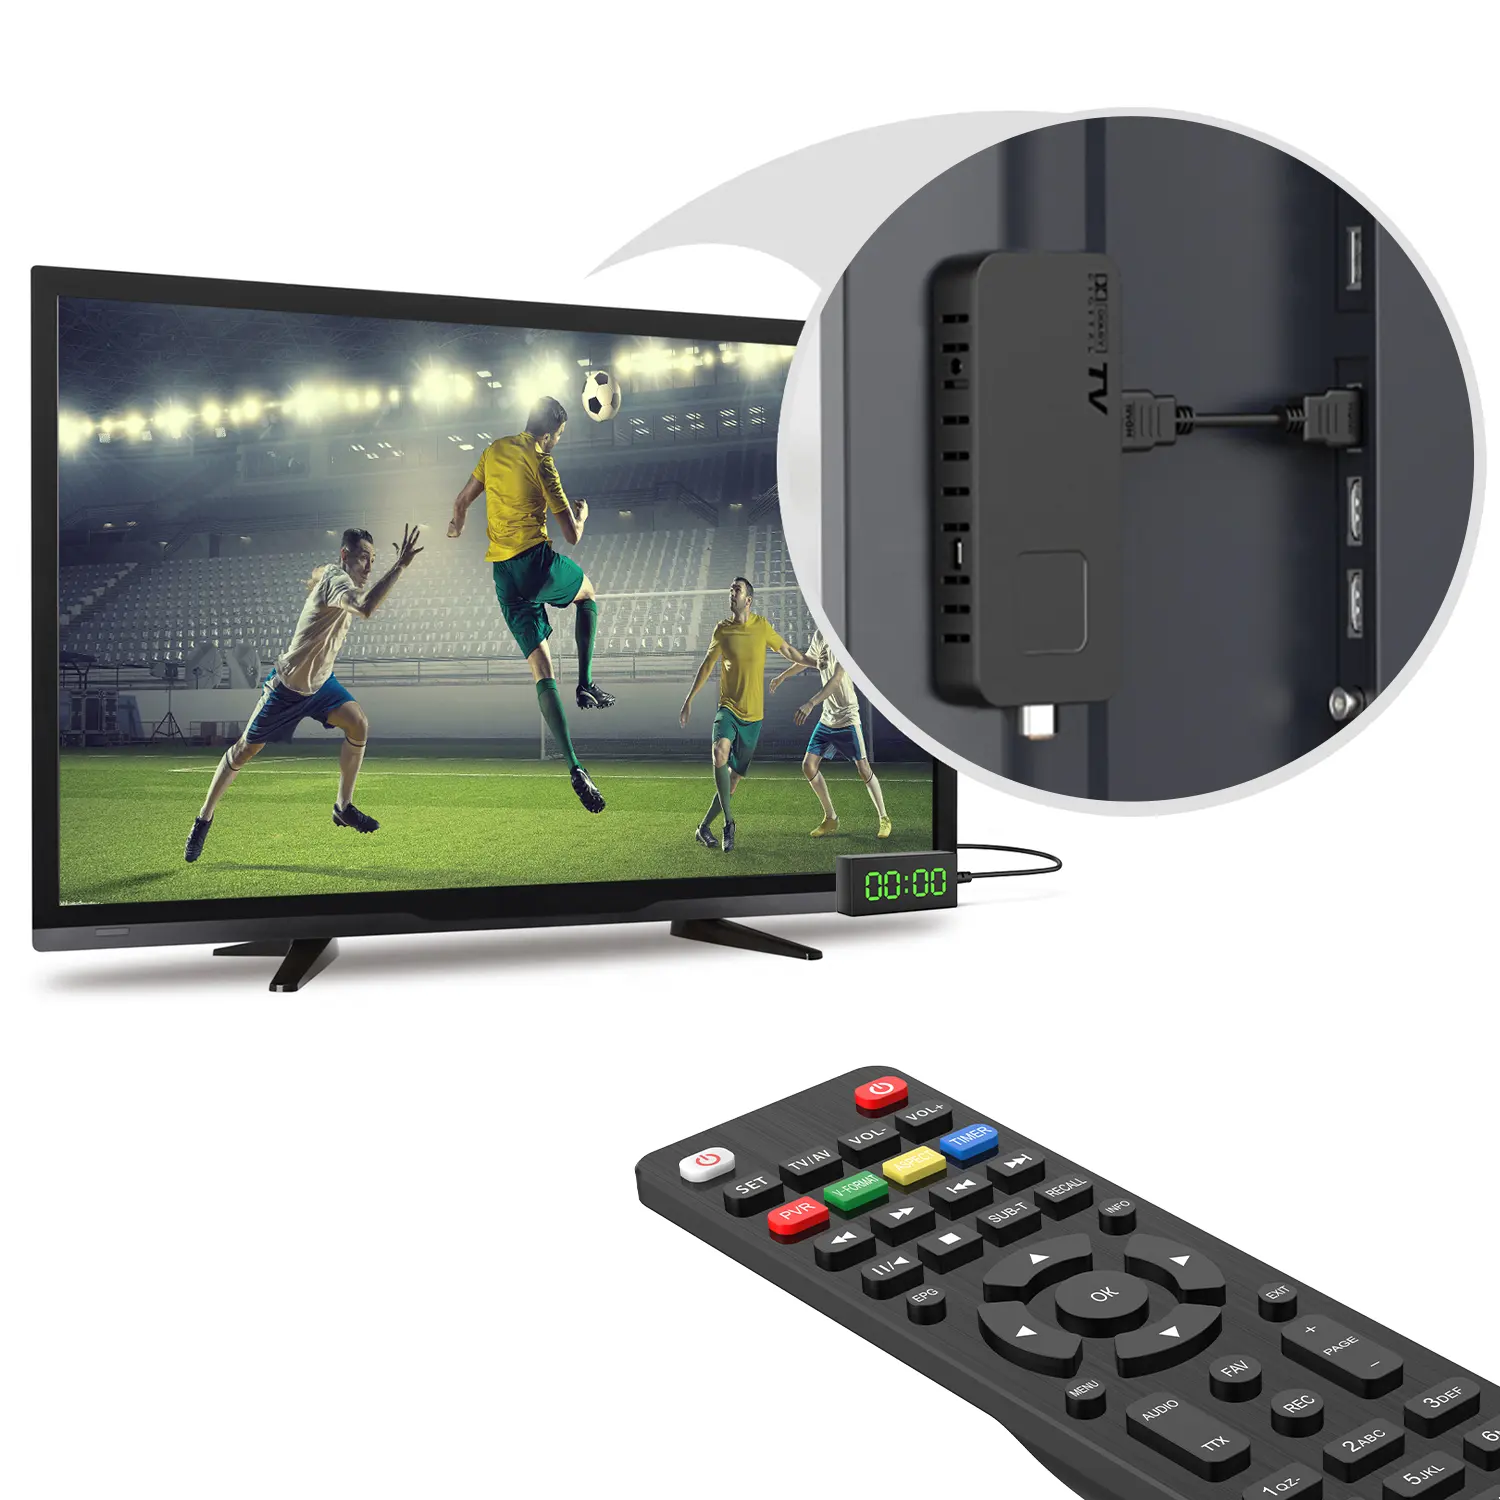 Mini-Set-Top-Box HD 1080p 10Bit STB T2 h265 dvb-t2 TV-Stick-Tuner T2 USB-Dongle TV-Stick